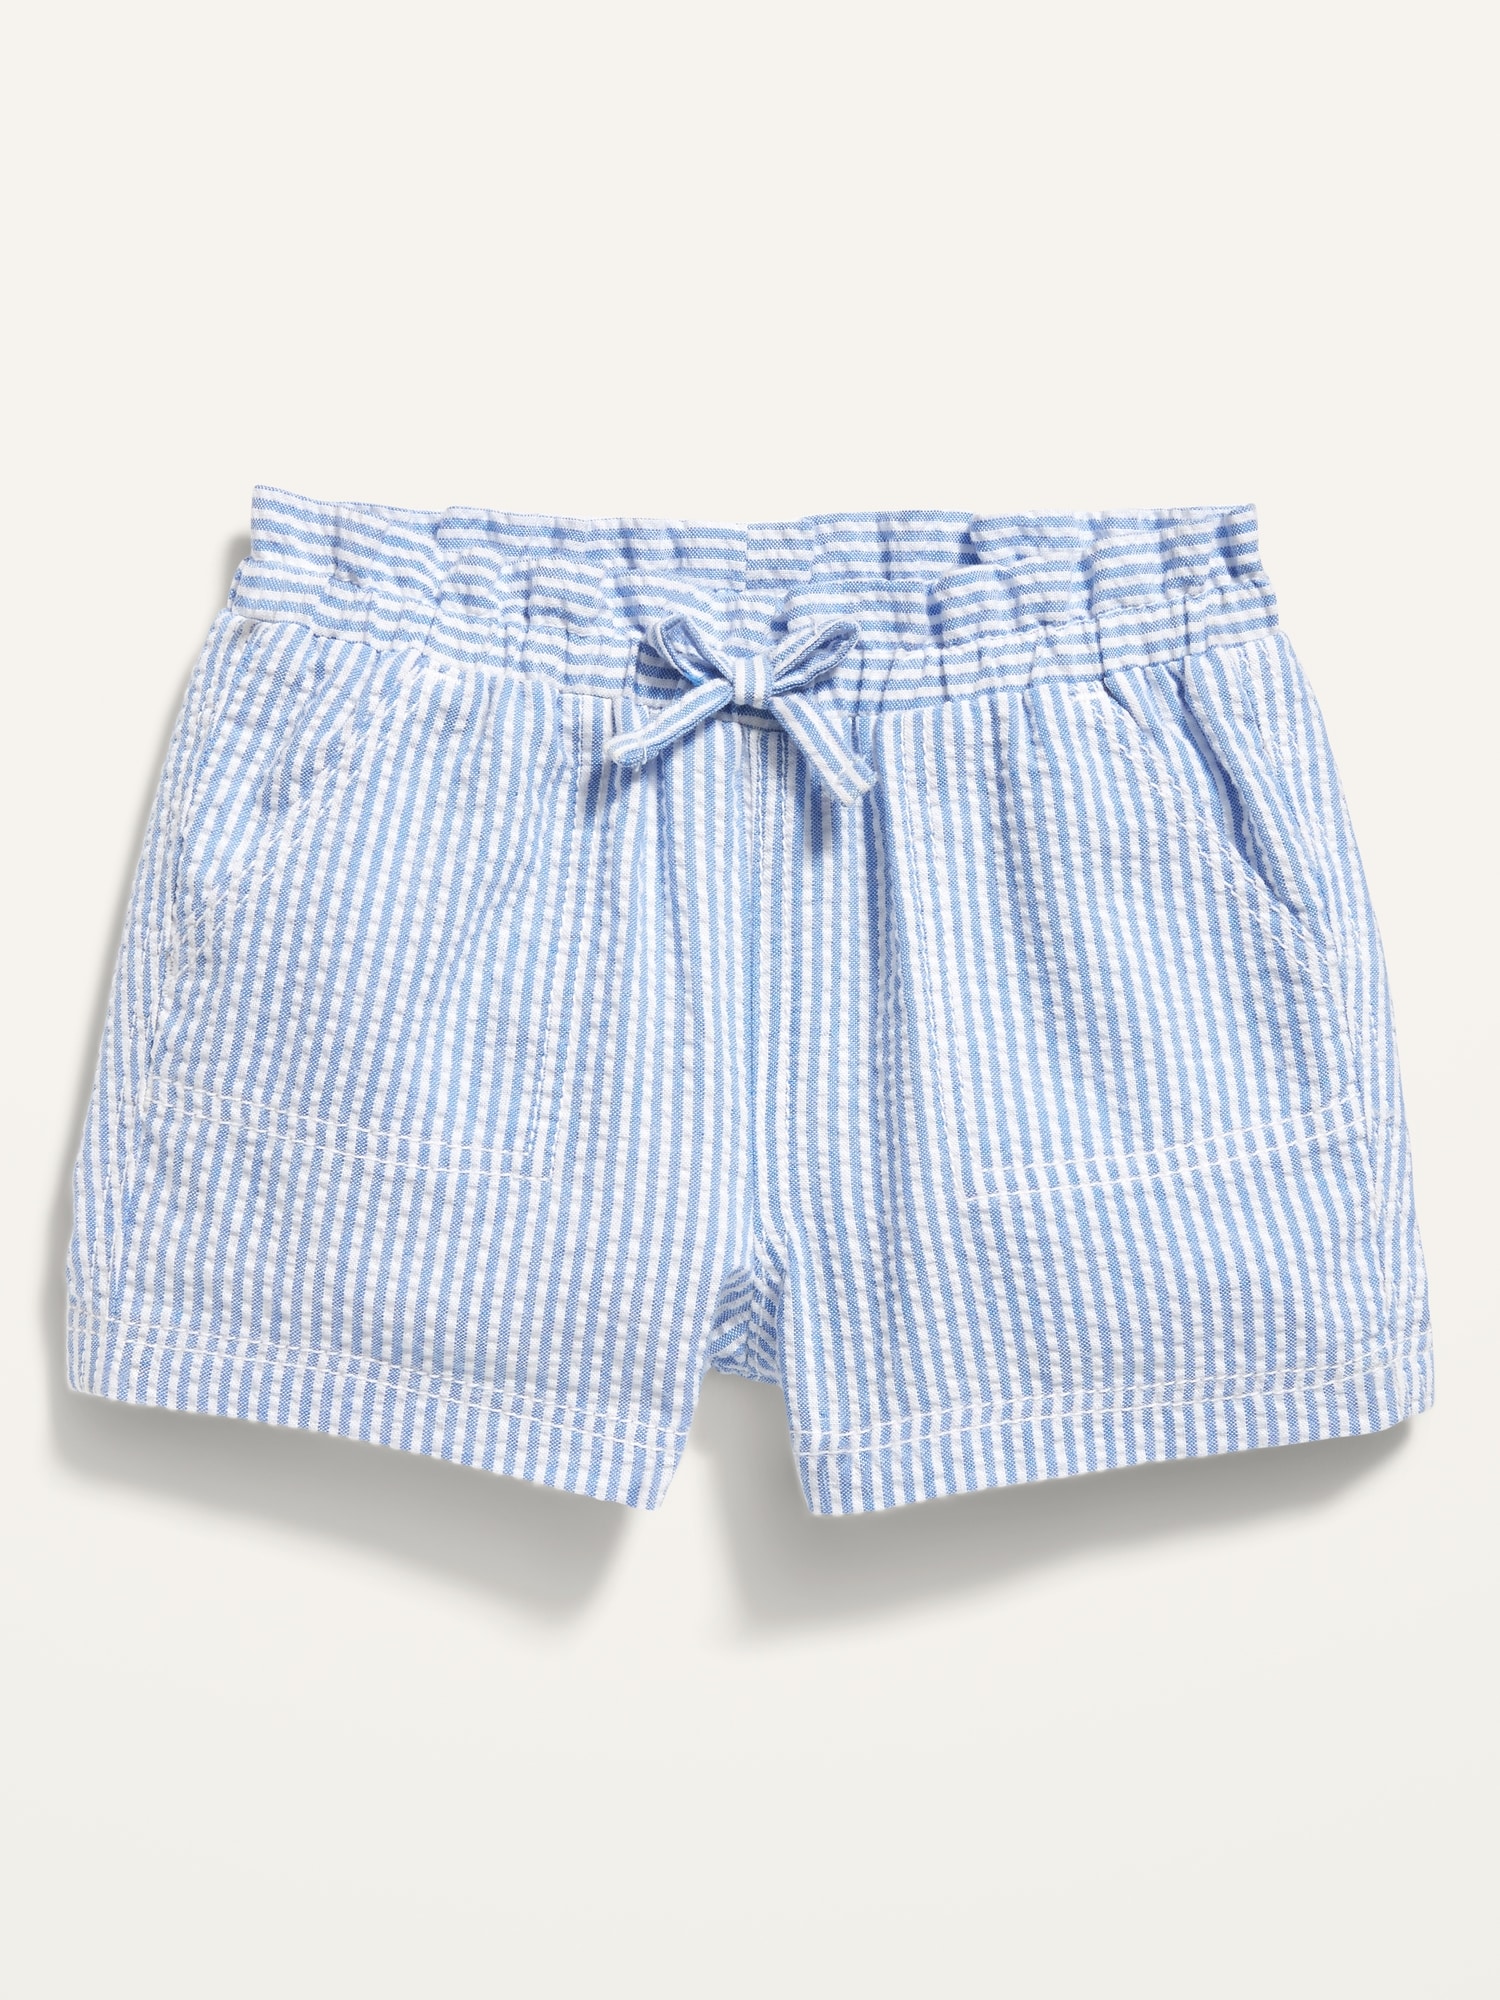 Seersucker-Stripe Pull-On Shorts for Baby | Old Navy